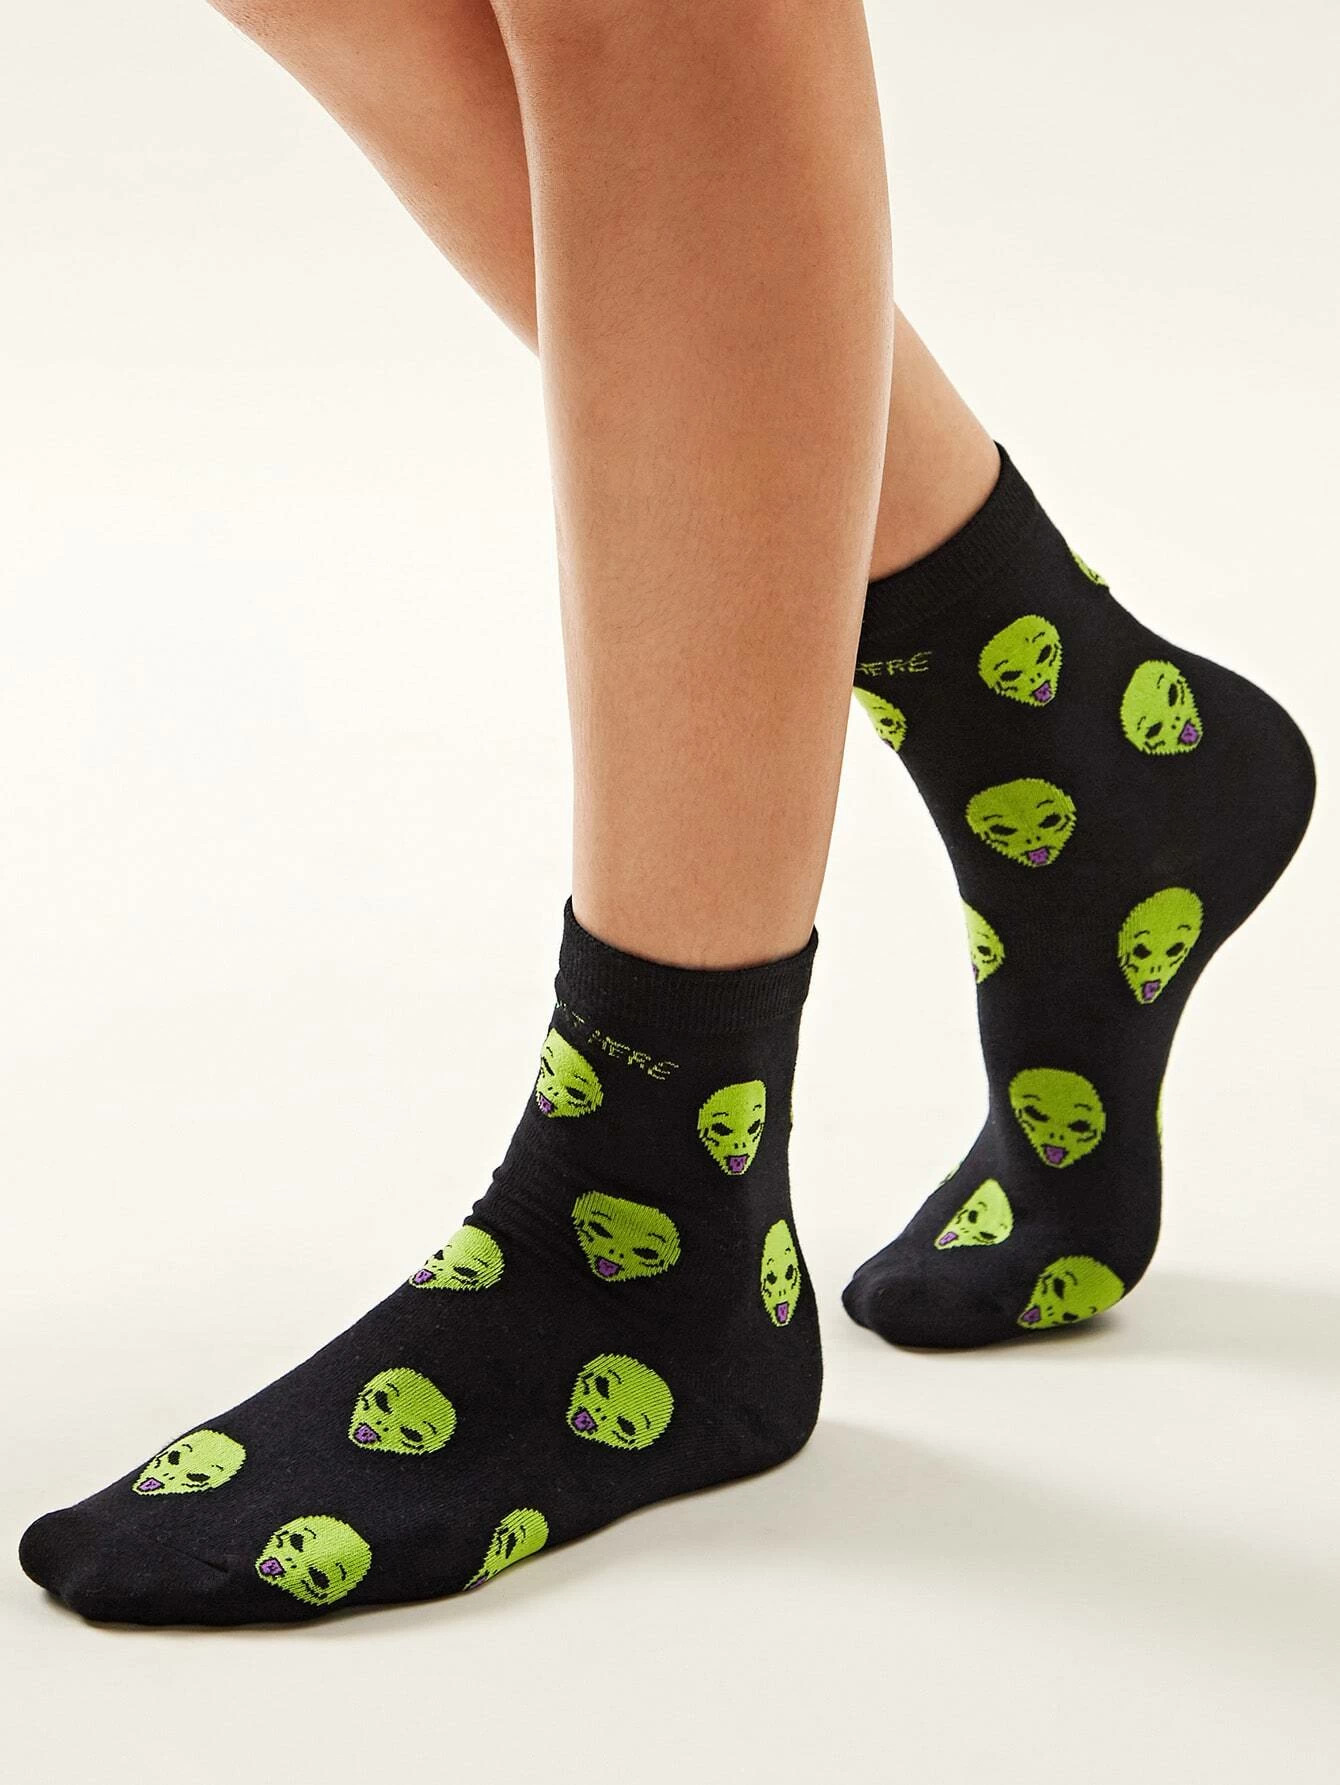 Green alien socks